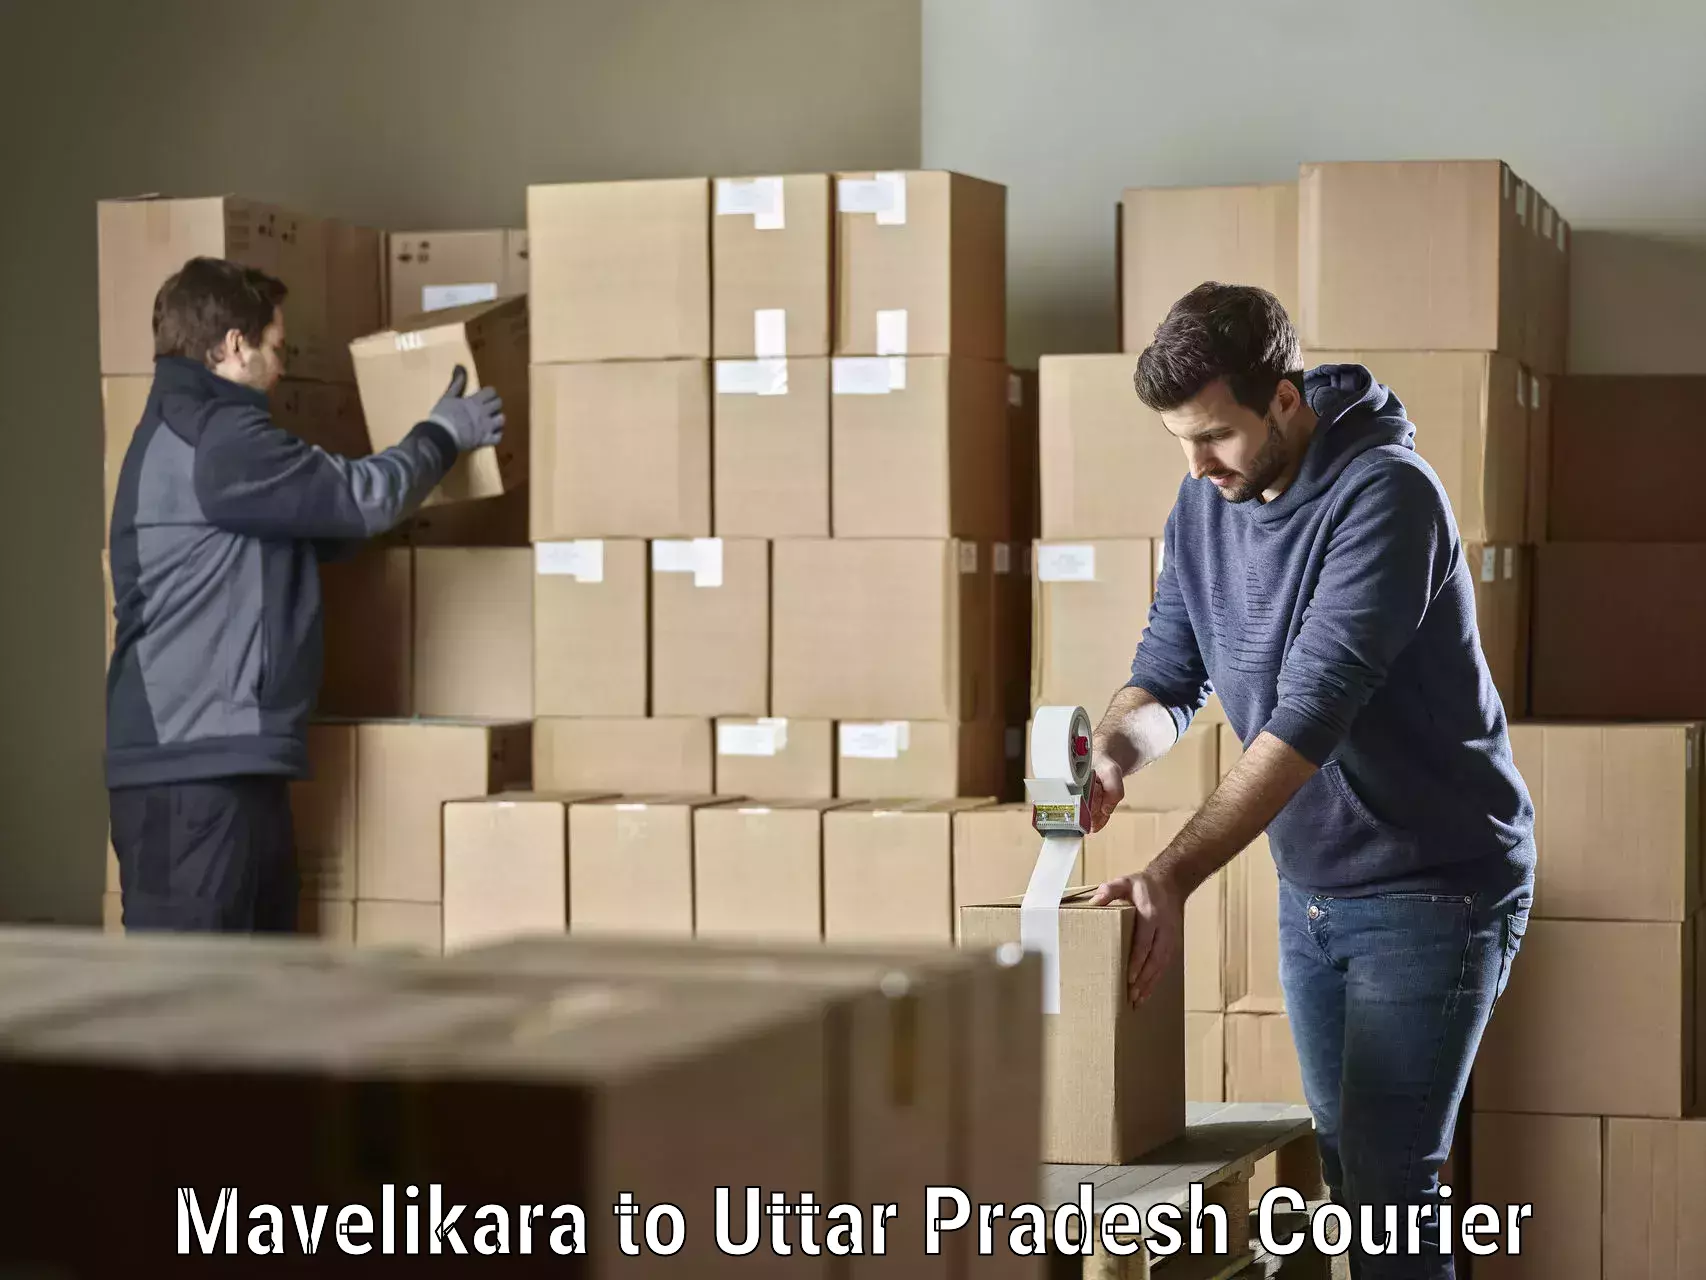 Courier service comparison Mavelikara to Uttar Pradesh